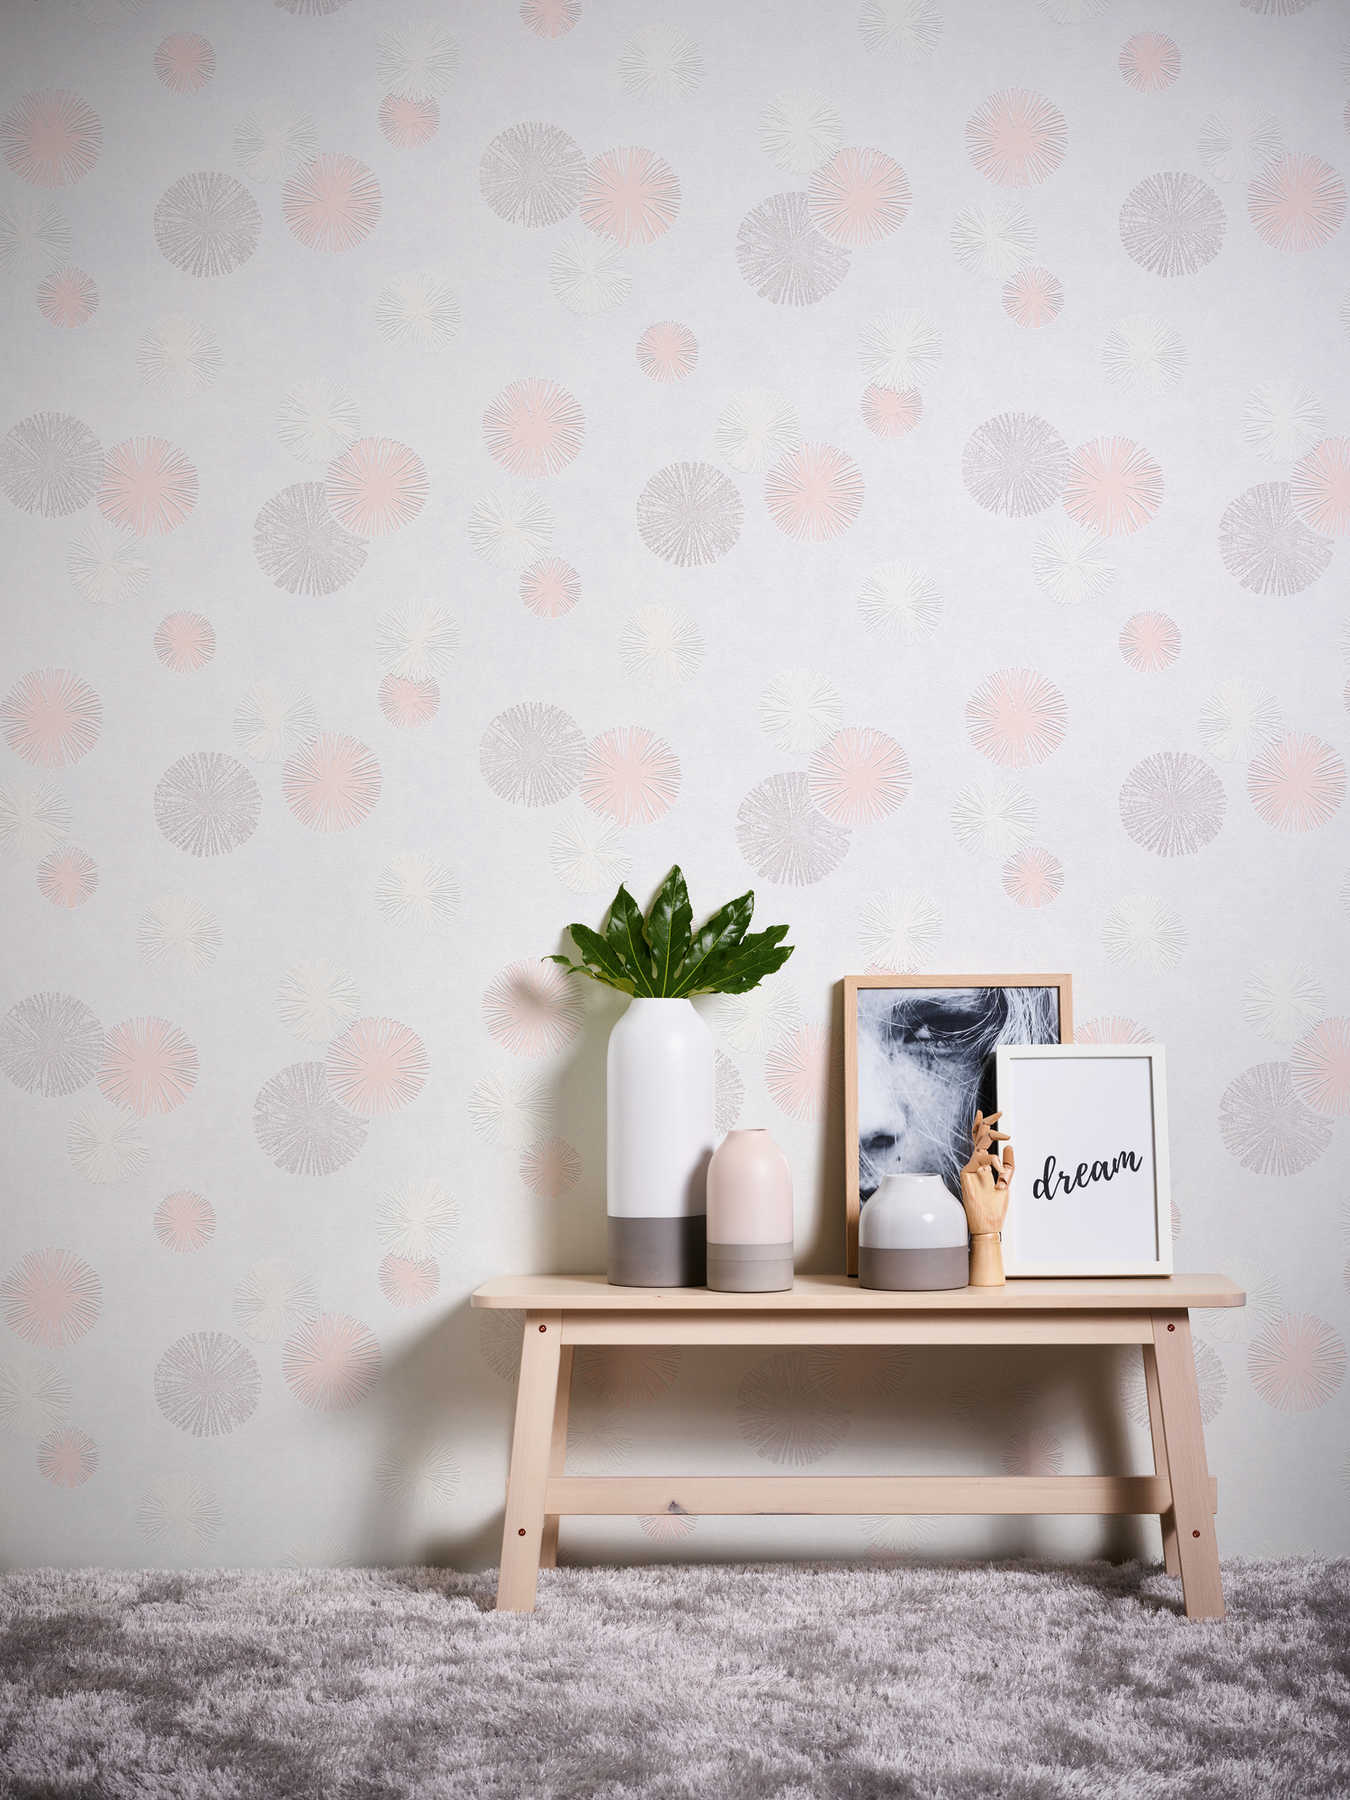             Textured wallpaper with graphic pattern - cream, metallic, pink
        